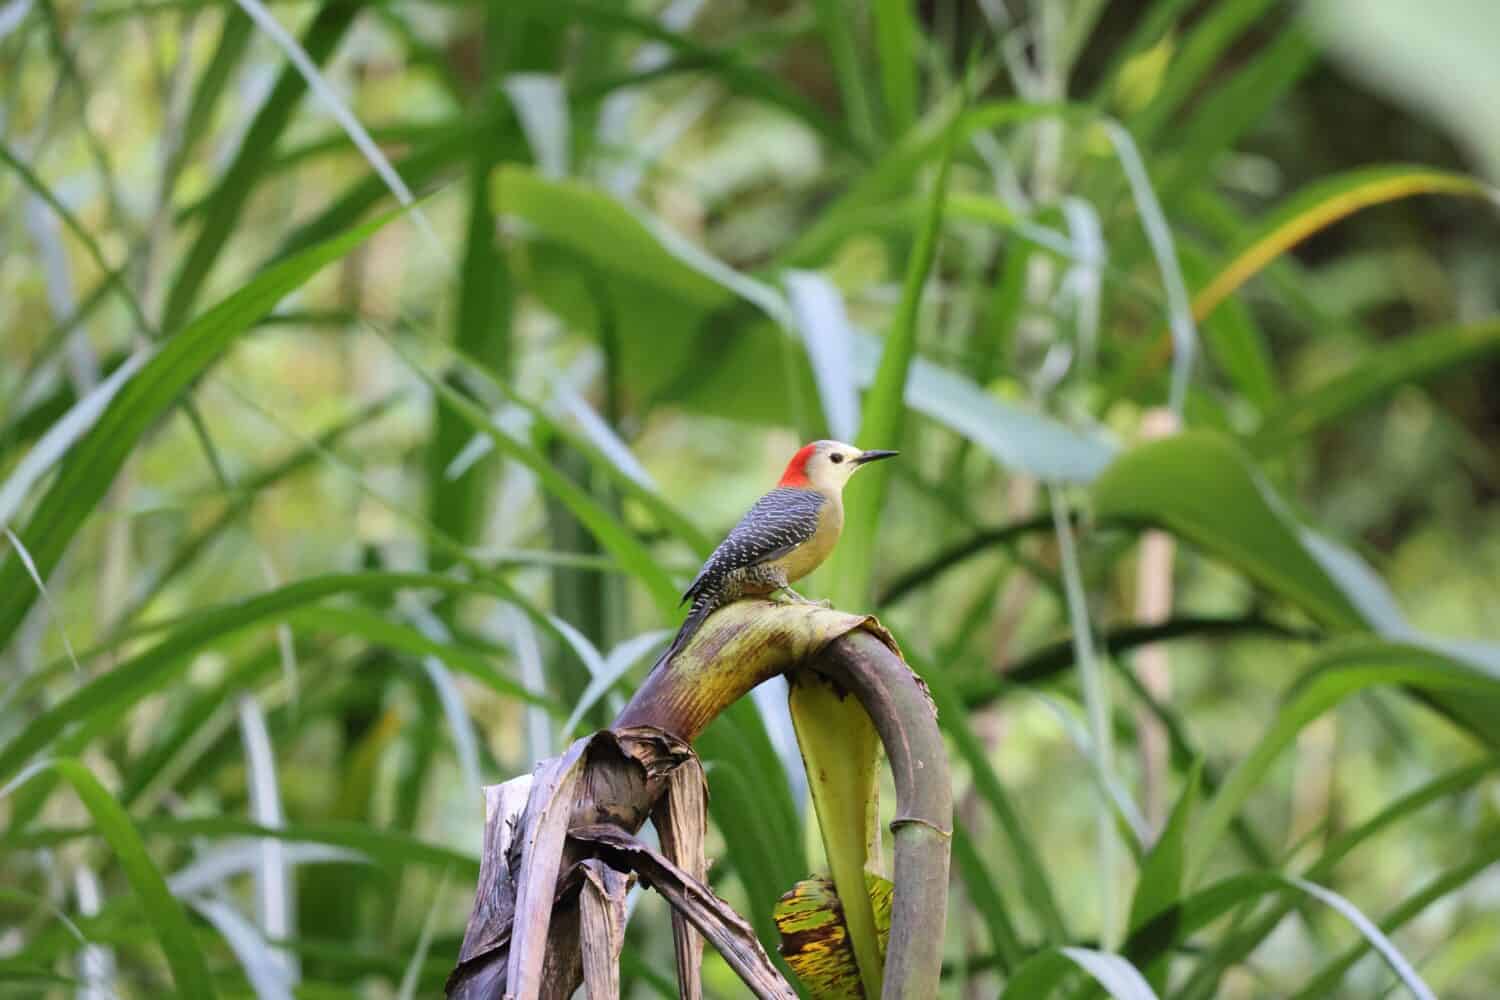 Jamaican woodpecker (Melanerpes radiolatus) in Jamaica